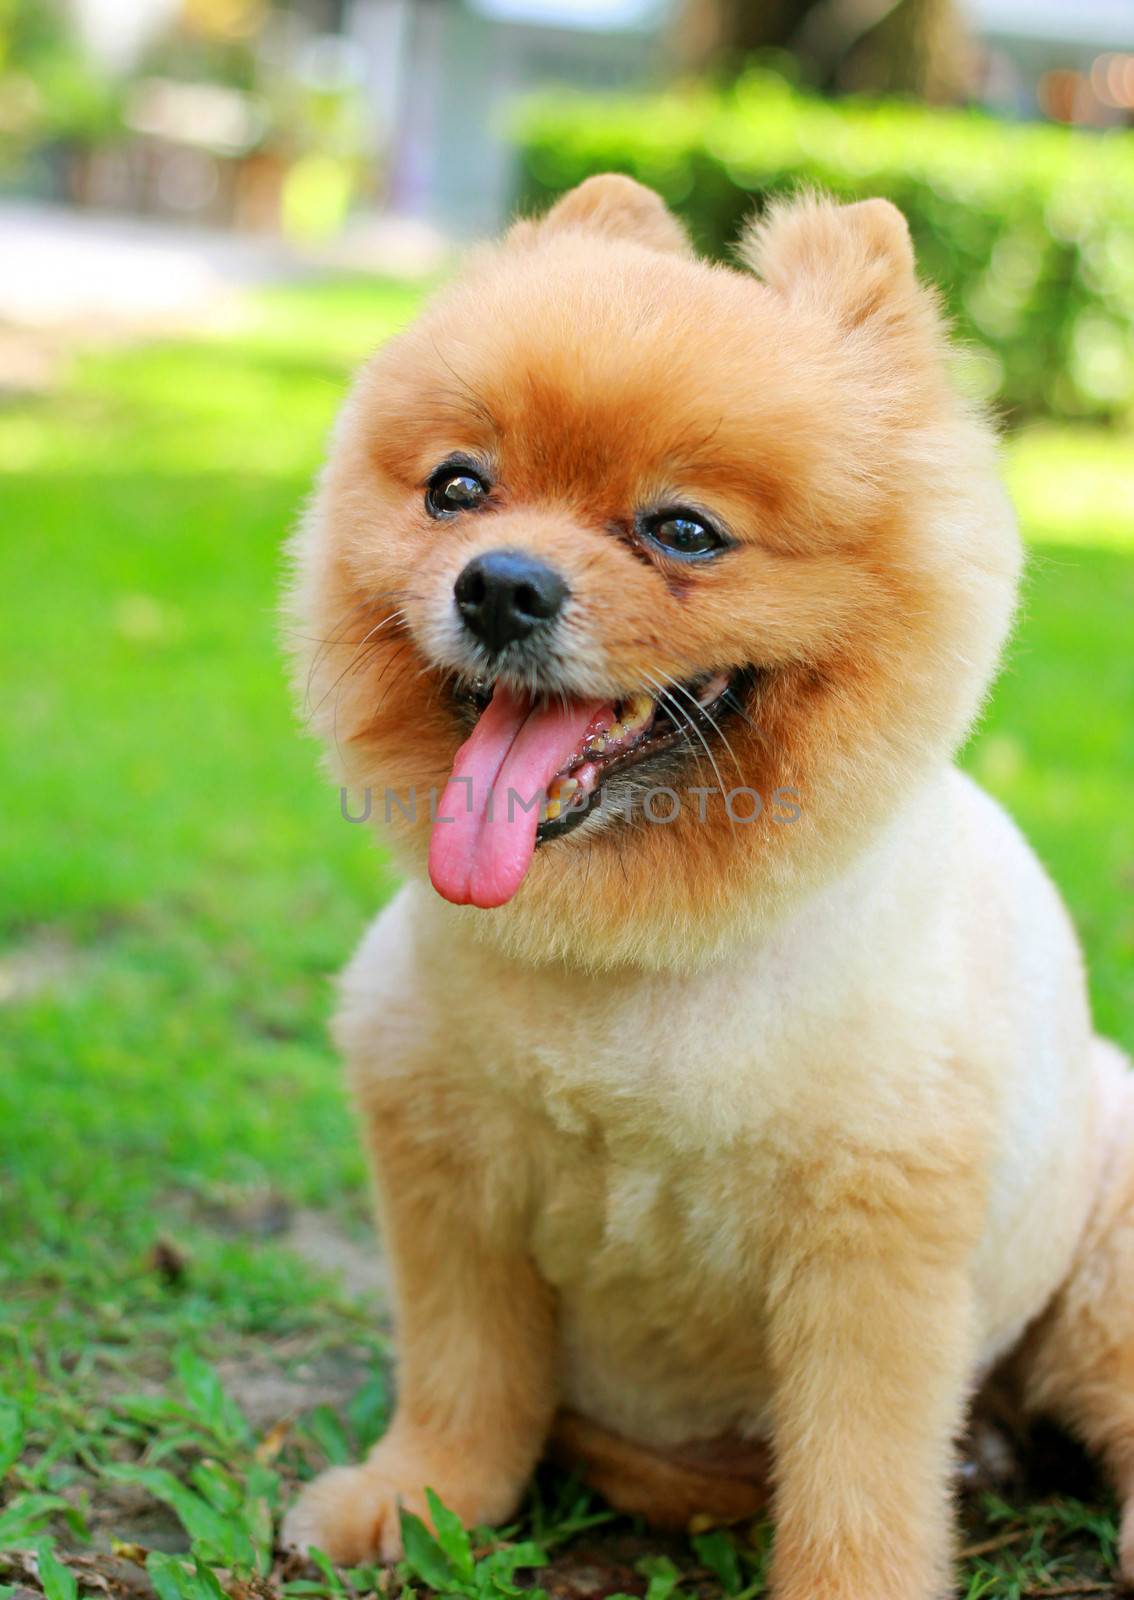 Cute pomeranian dog in garden